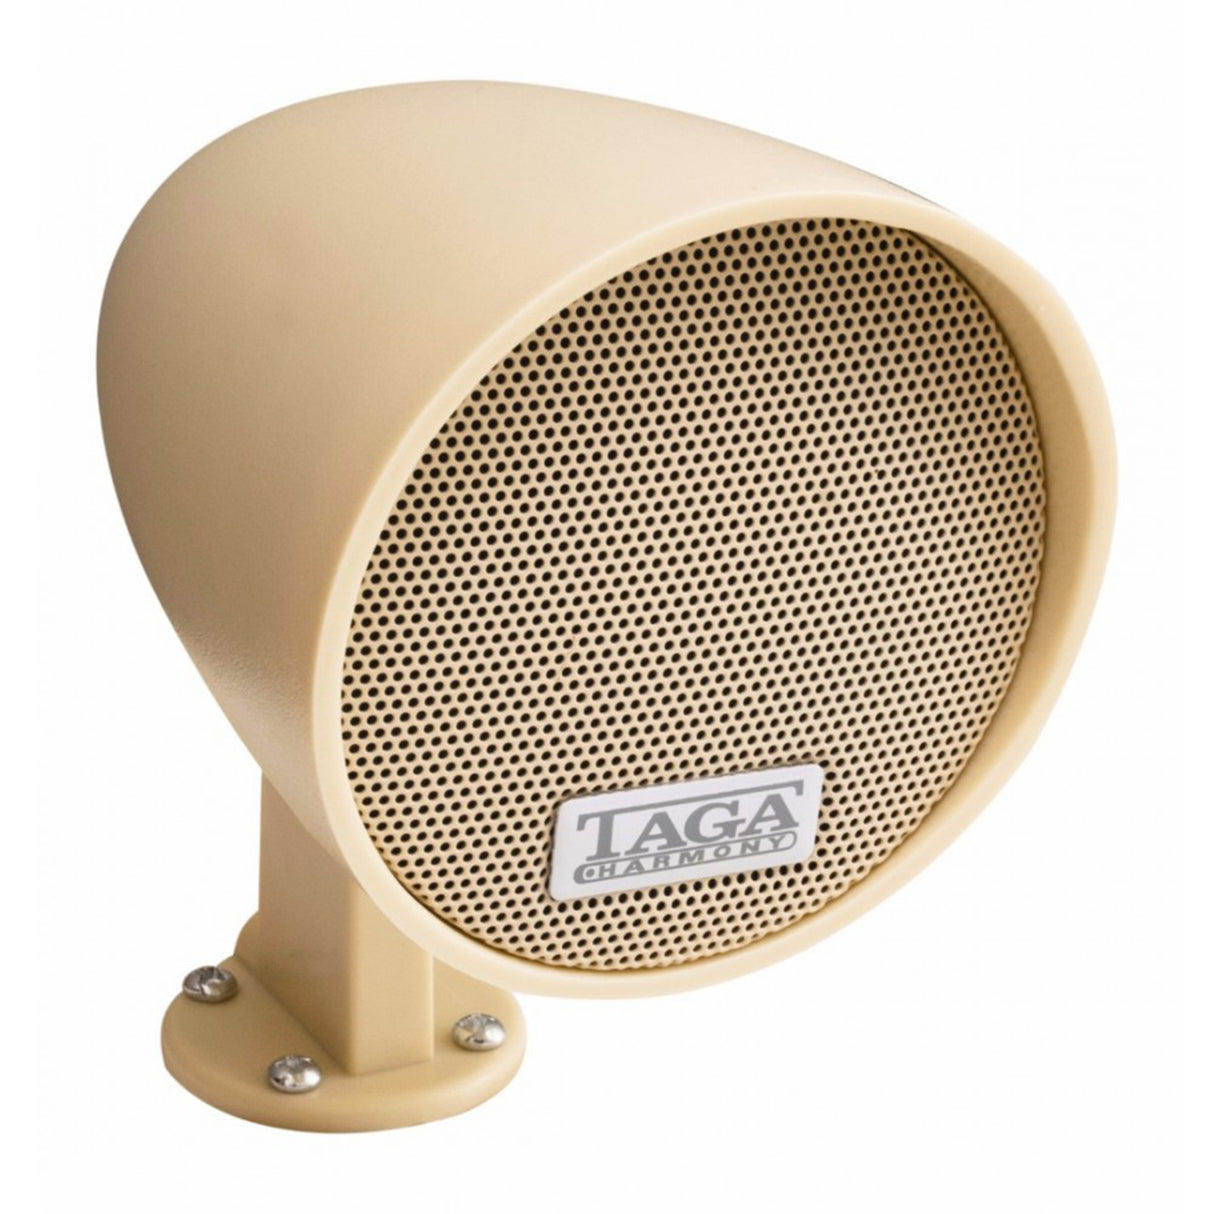 TAGA HARMONY TRS-5L -garden speakers (pair)